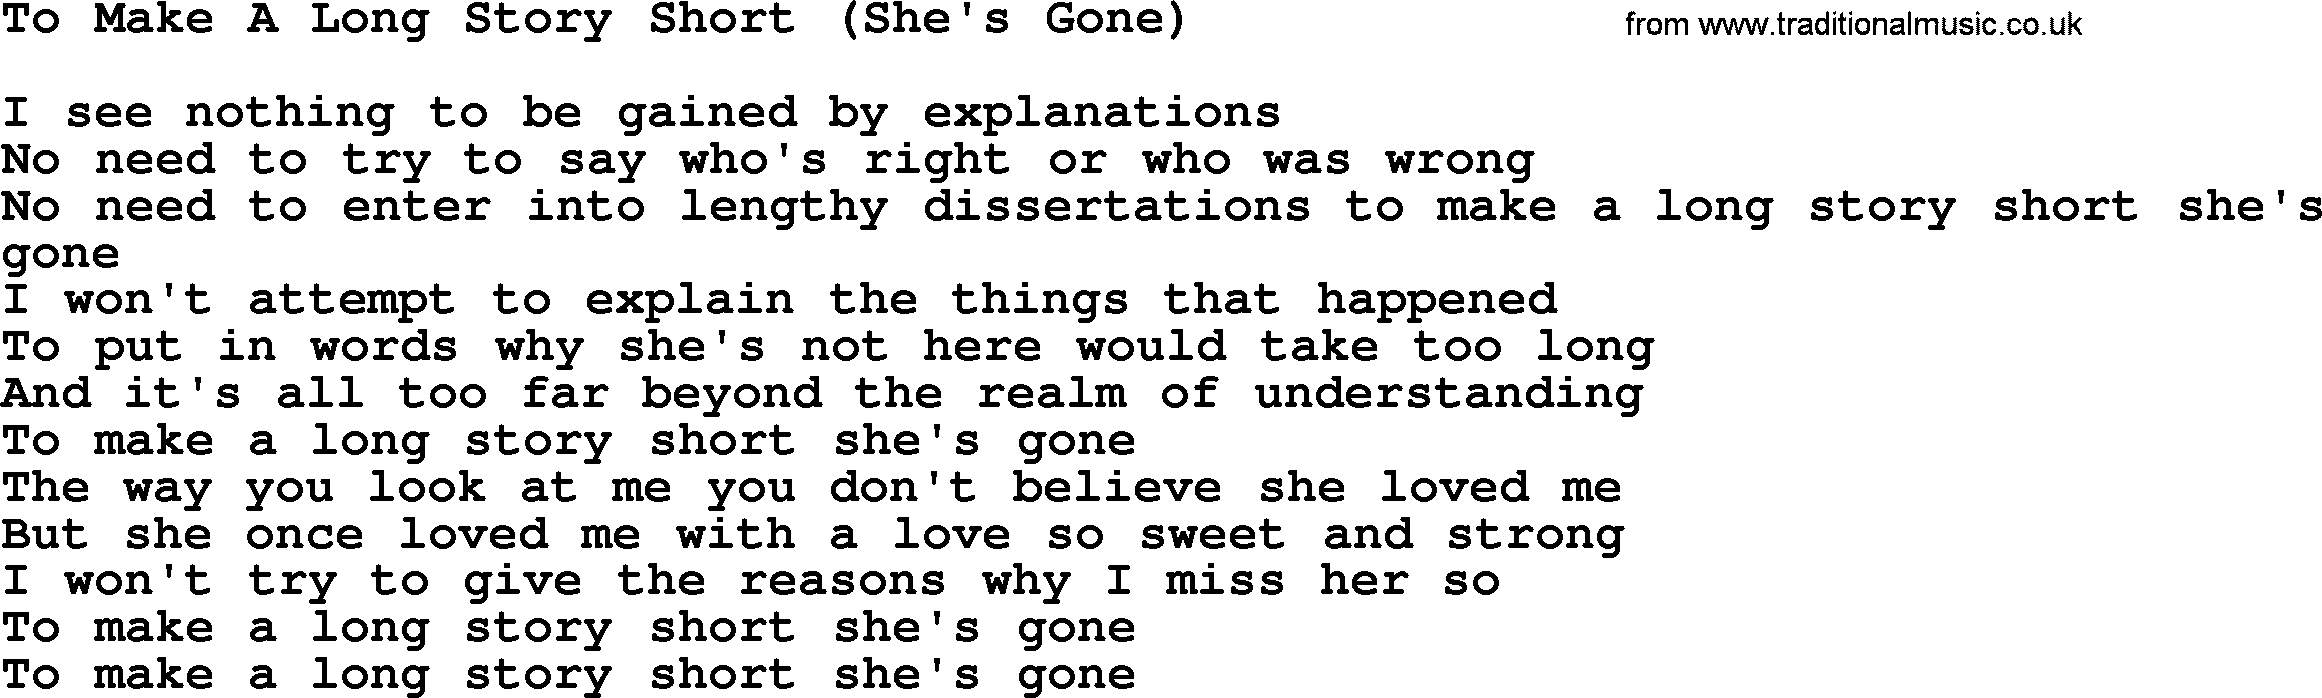 Willie Nelson song: To Make A Long Story Short (She's Gone) lyrics